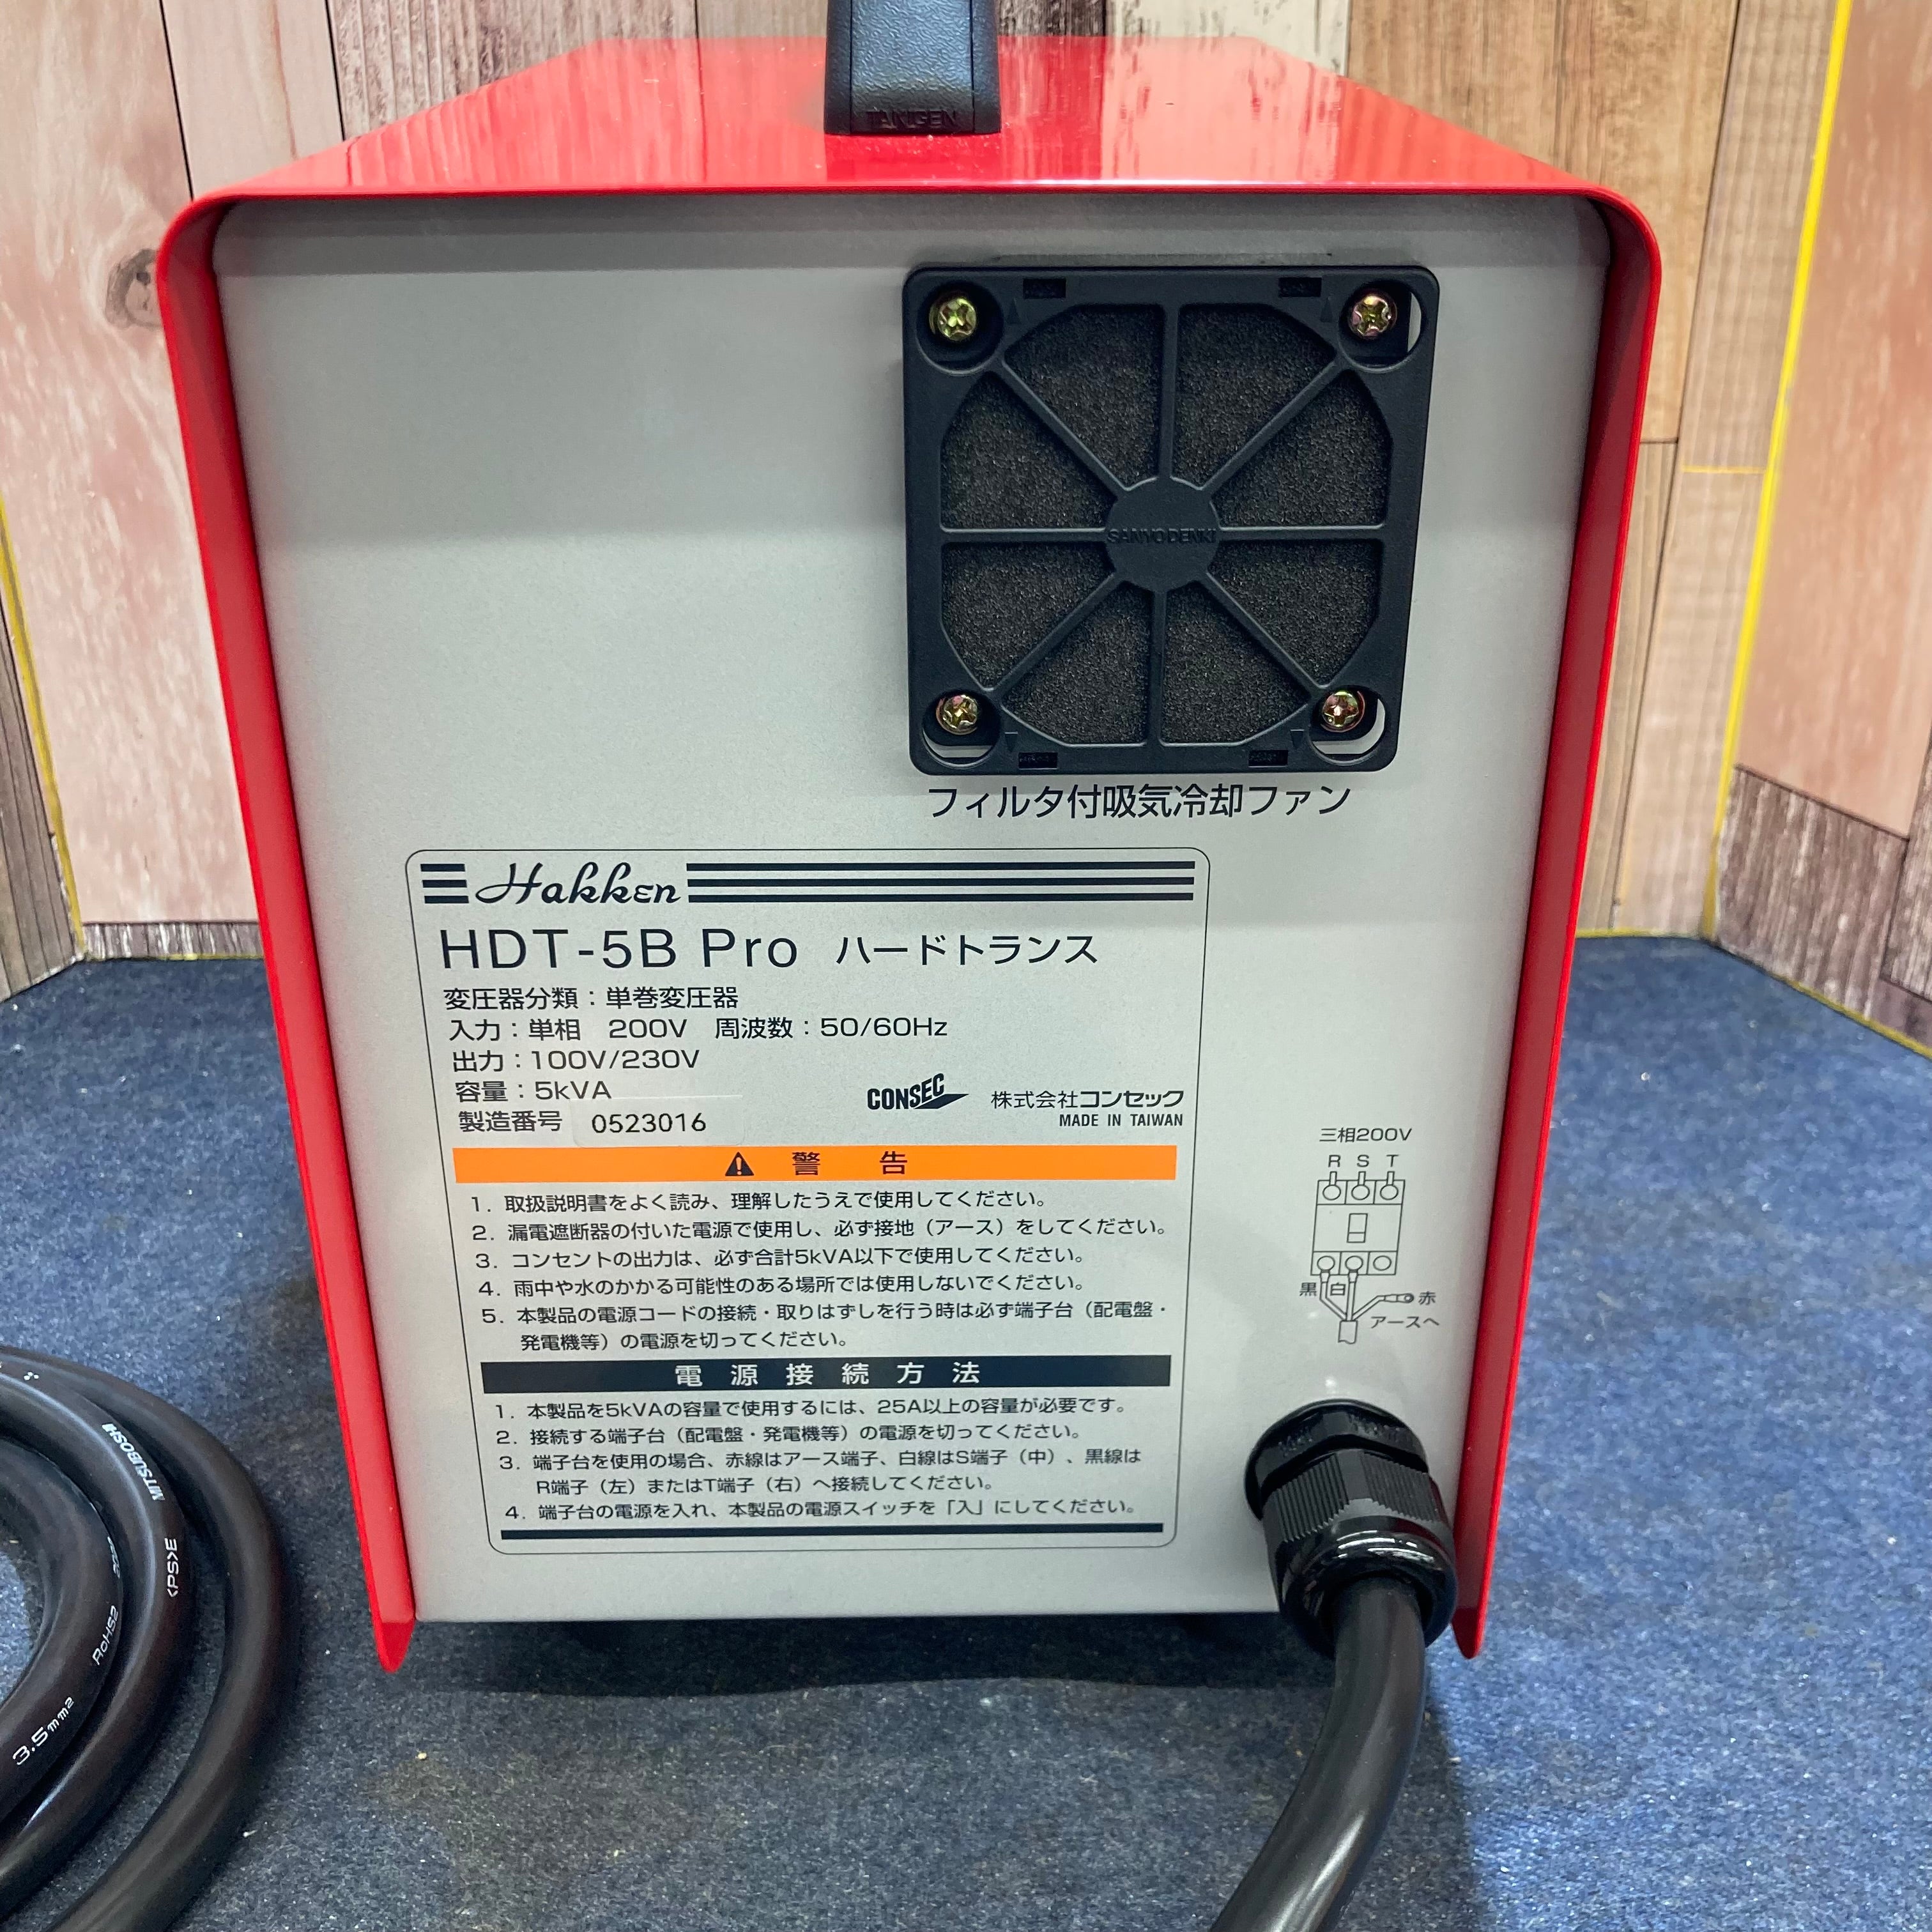 ○Hakken/コンセック 変圧器 ハードトランス(昇圧用)HDT-5B Pro【八潮